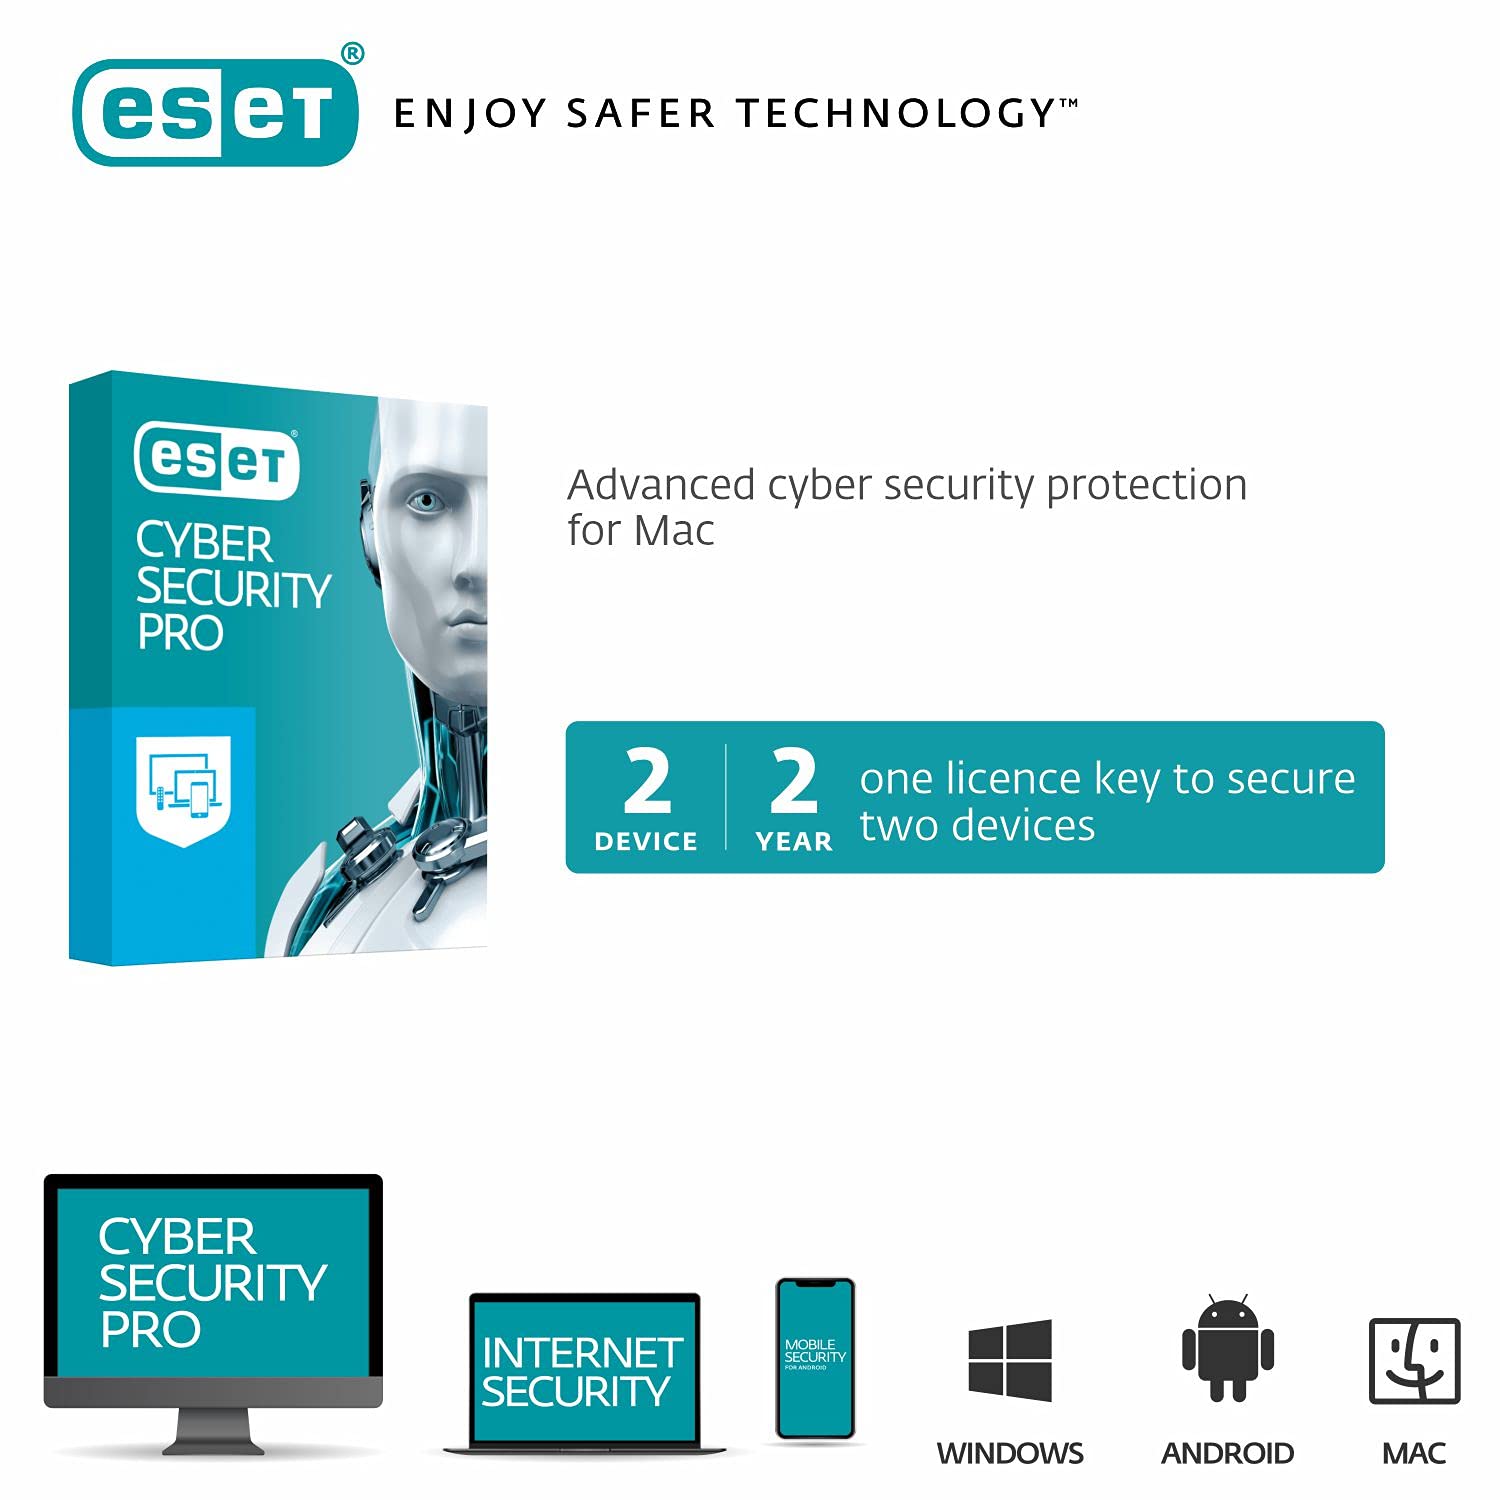 eset cyber security pro blocking transmission